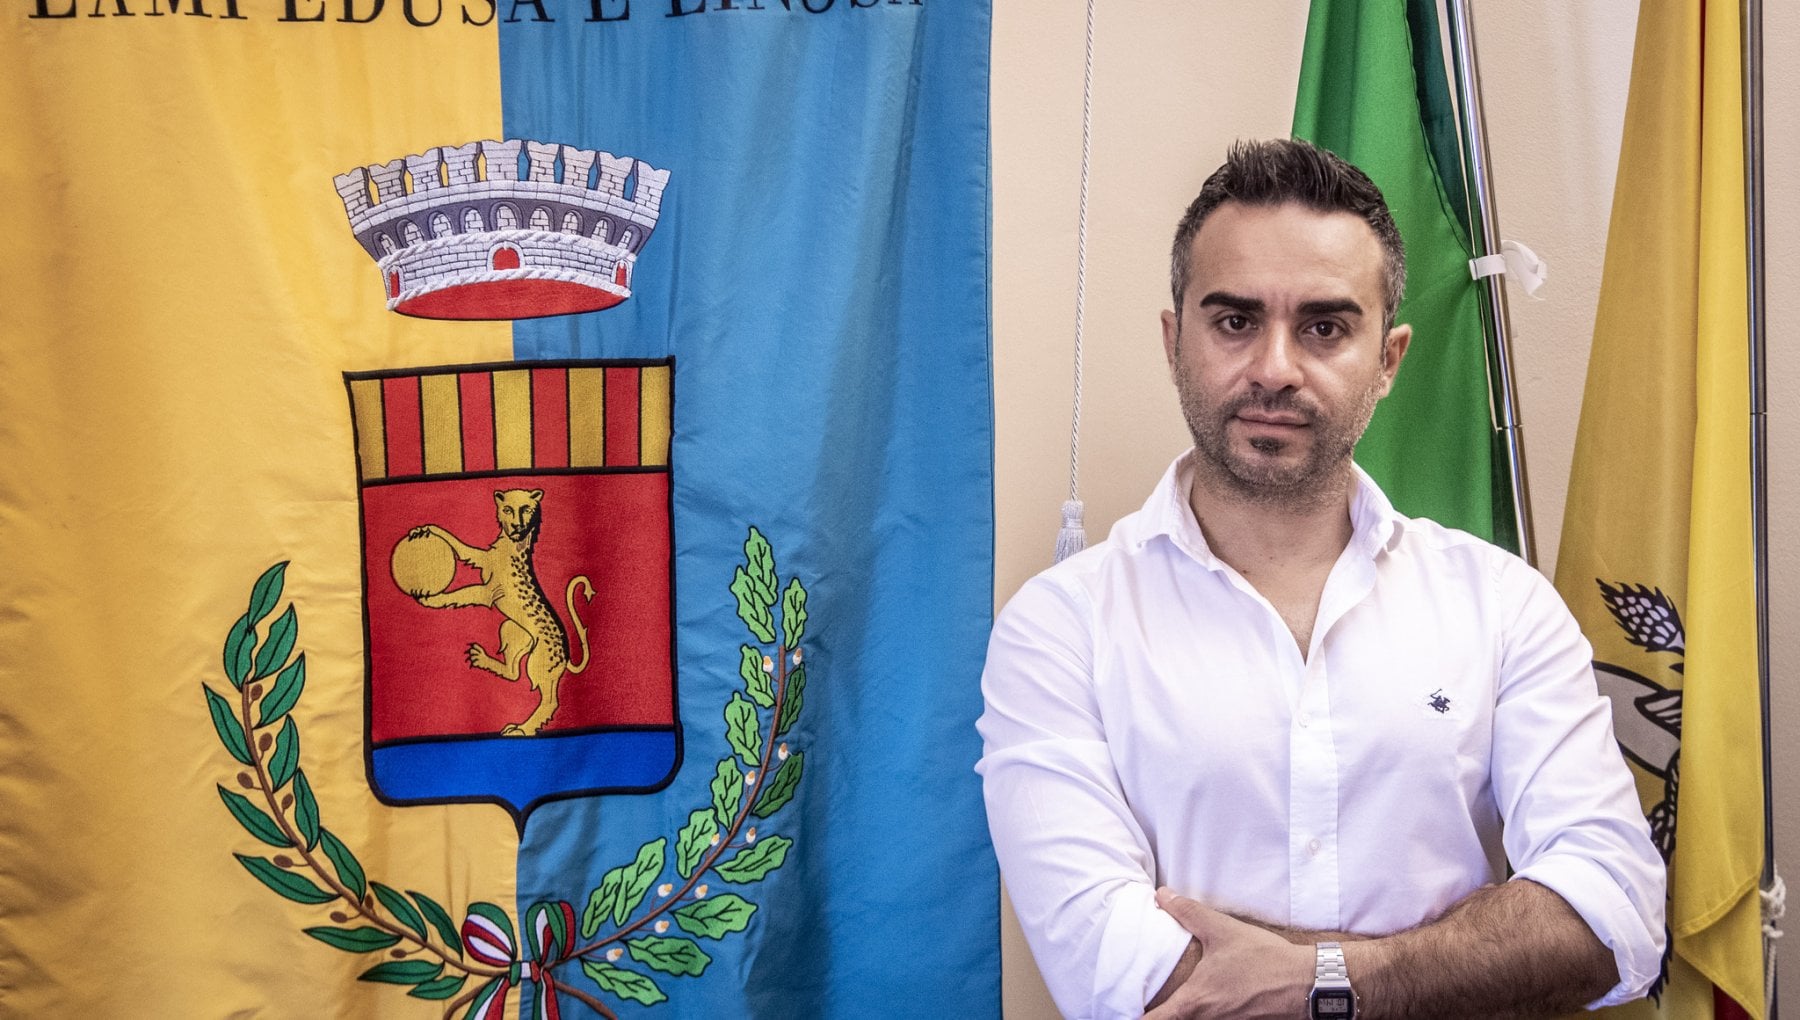 Migranti, il sindaco di Lampedusa parlerà all'Onu: "Affrontiamo problemi epocali"